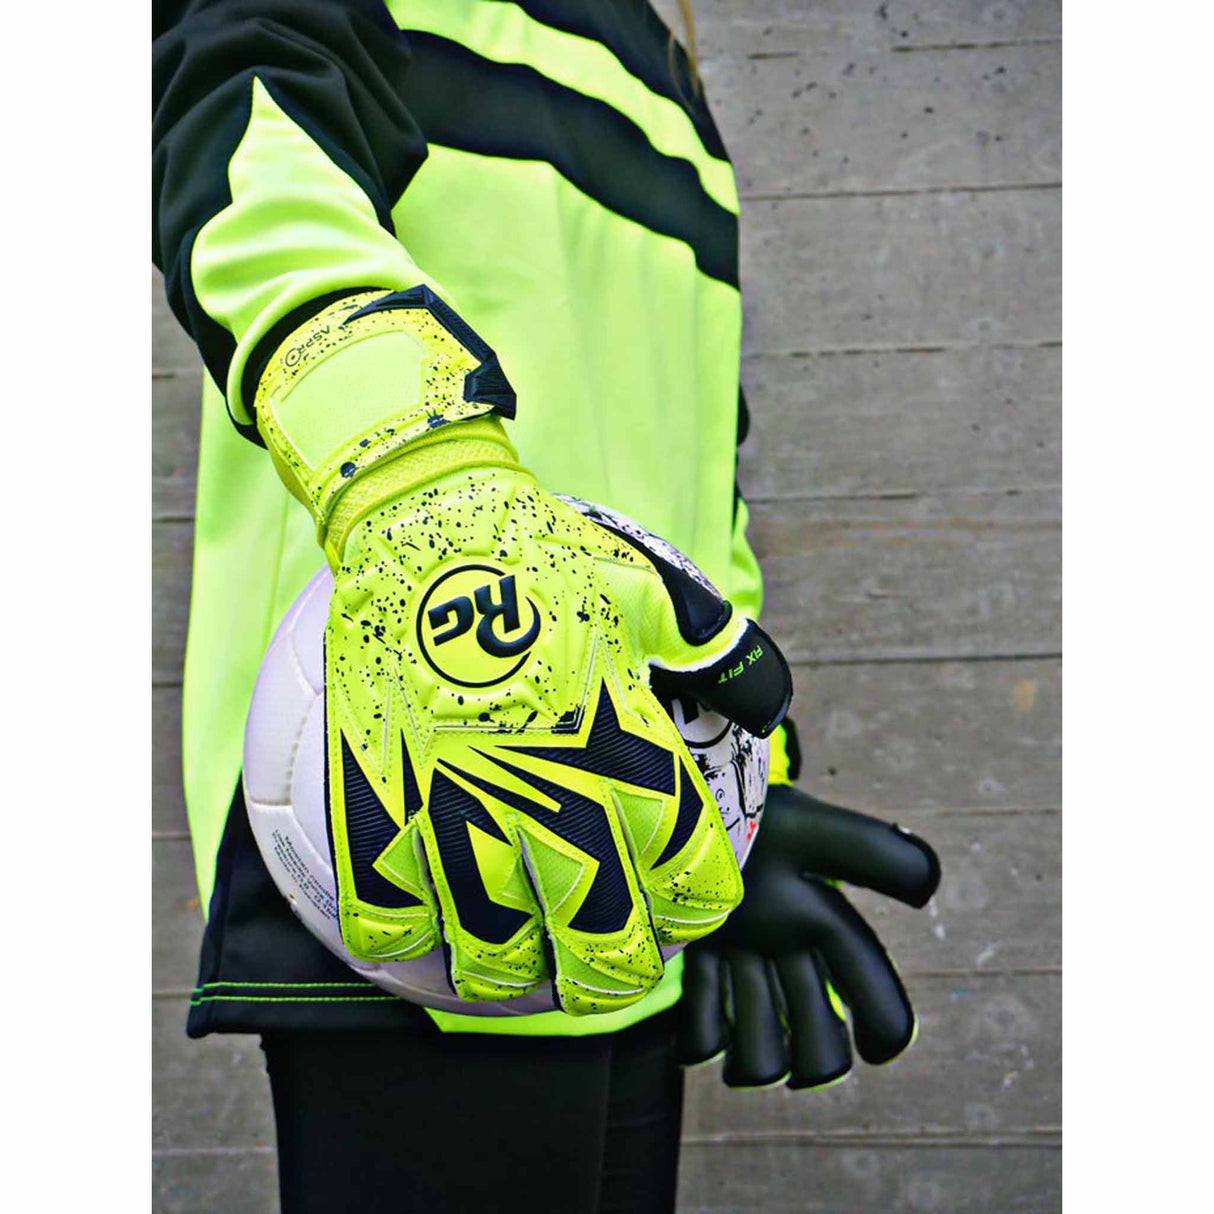 RG Aspro Fluo gants de gardien de but de soccer